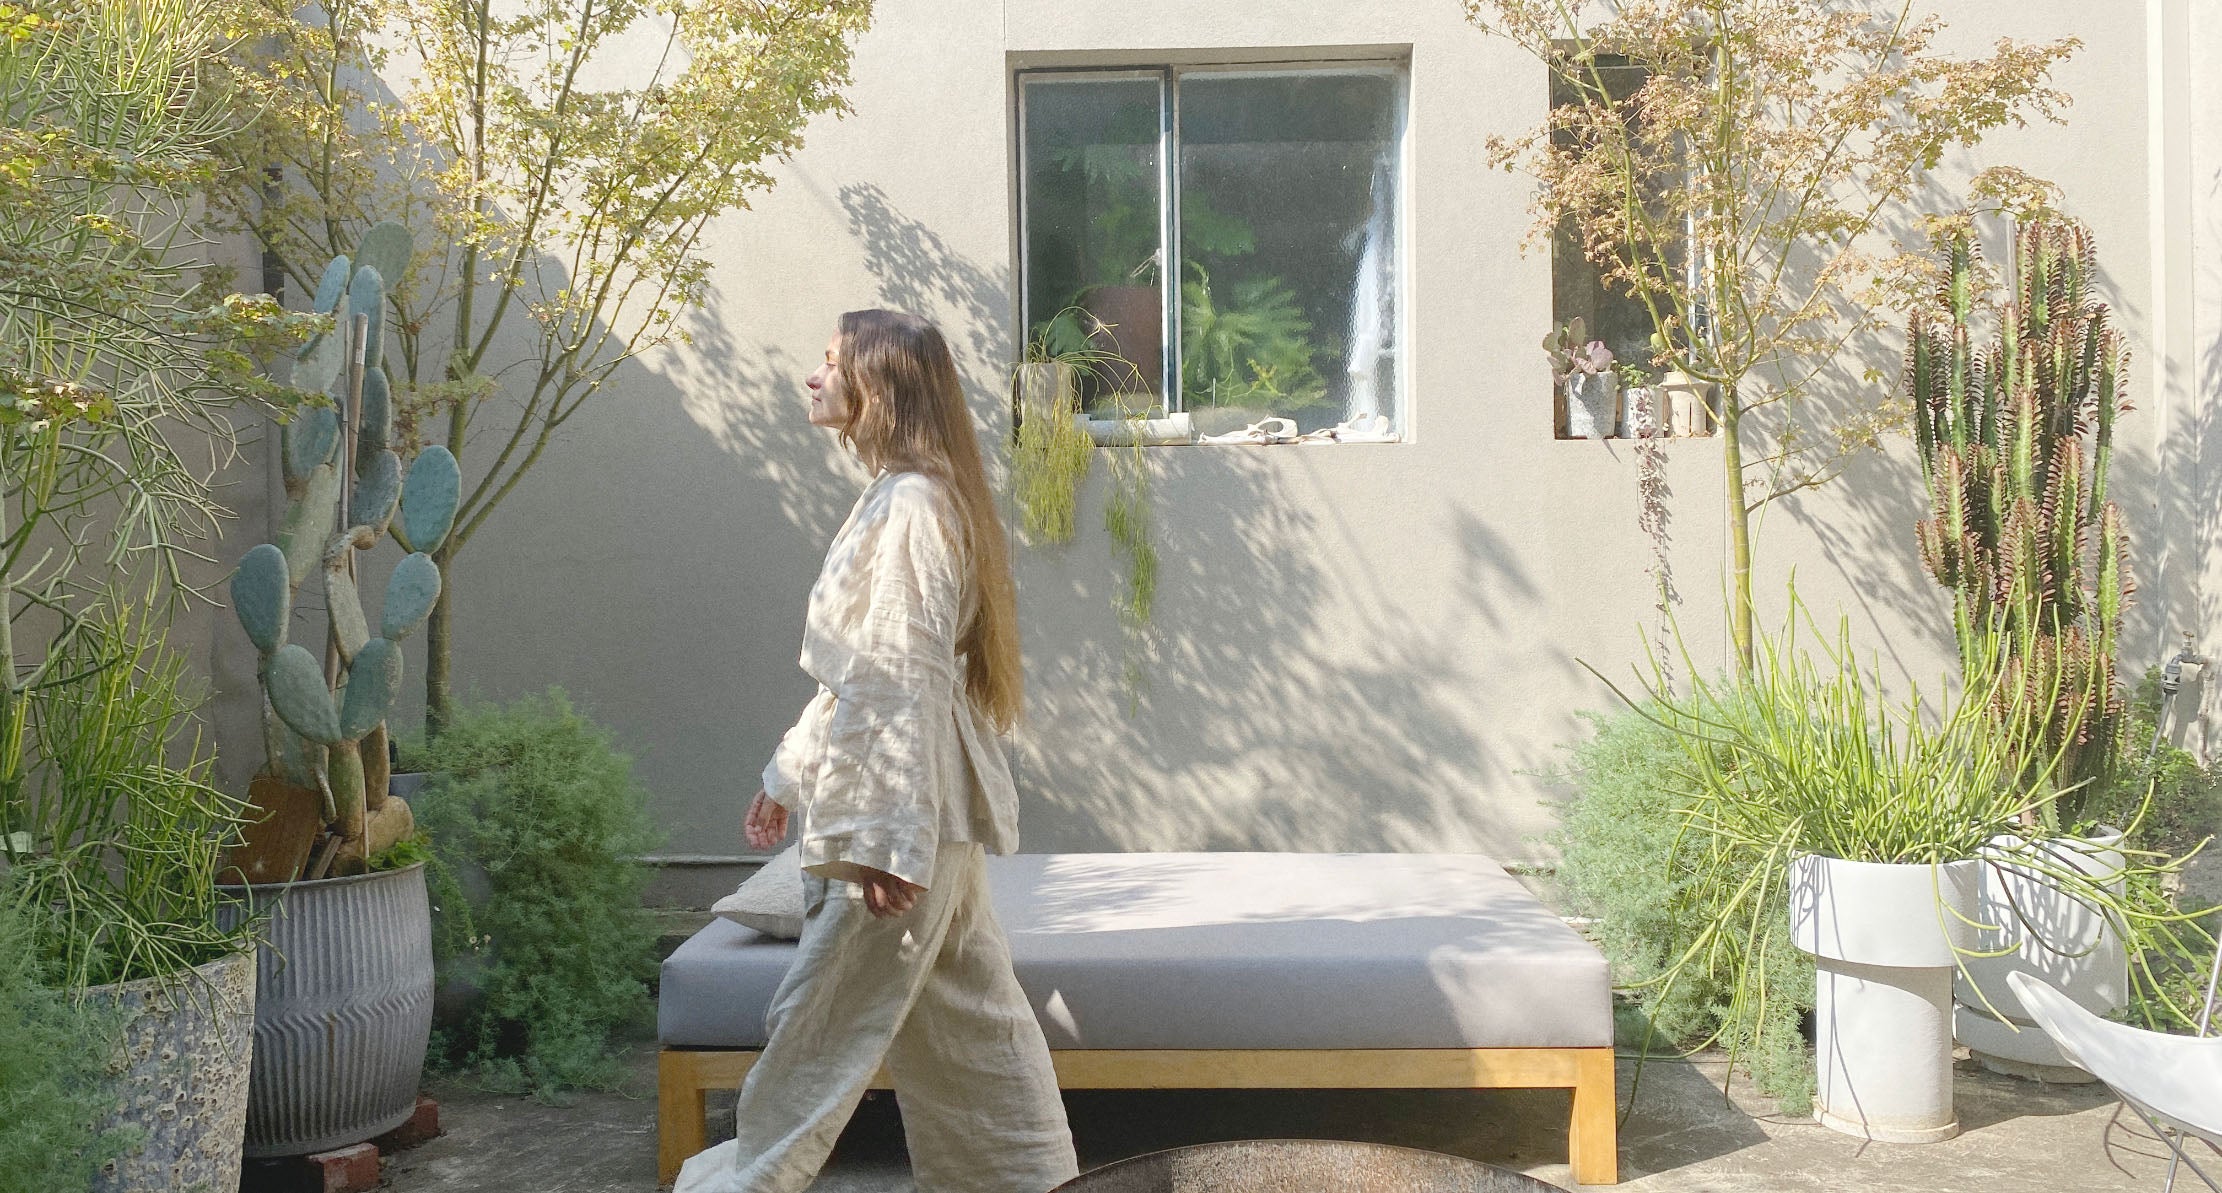 Shari Lowndes in her Zen Garden